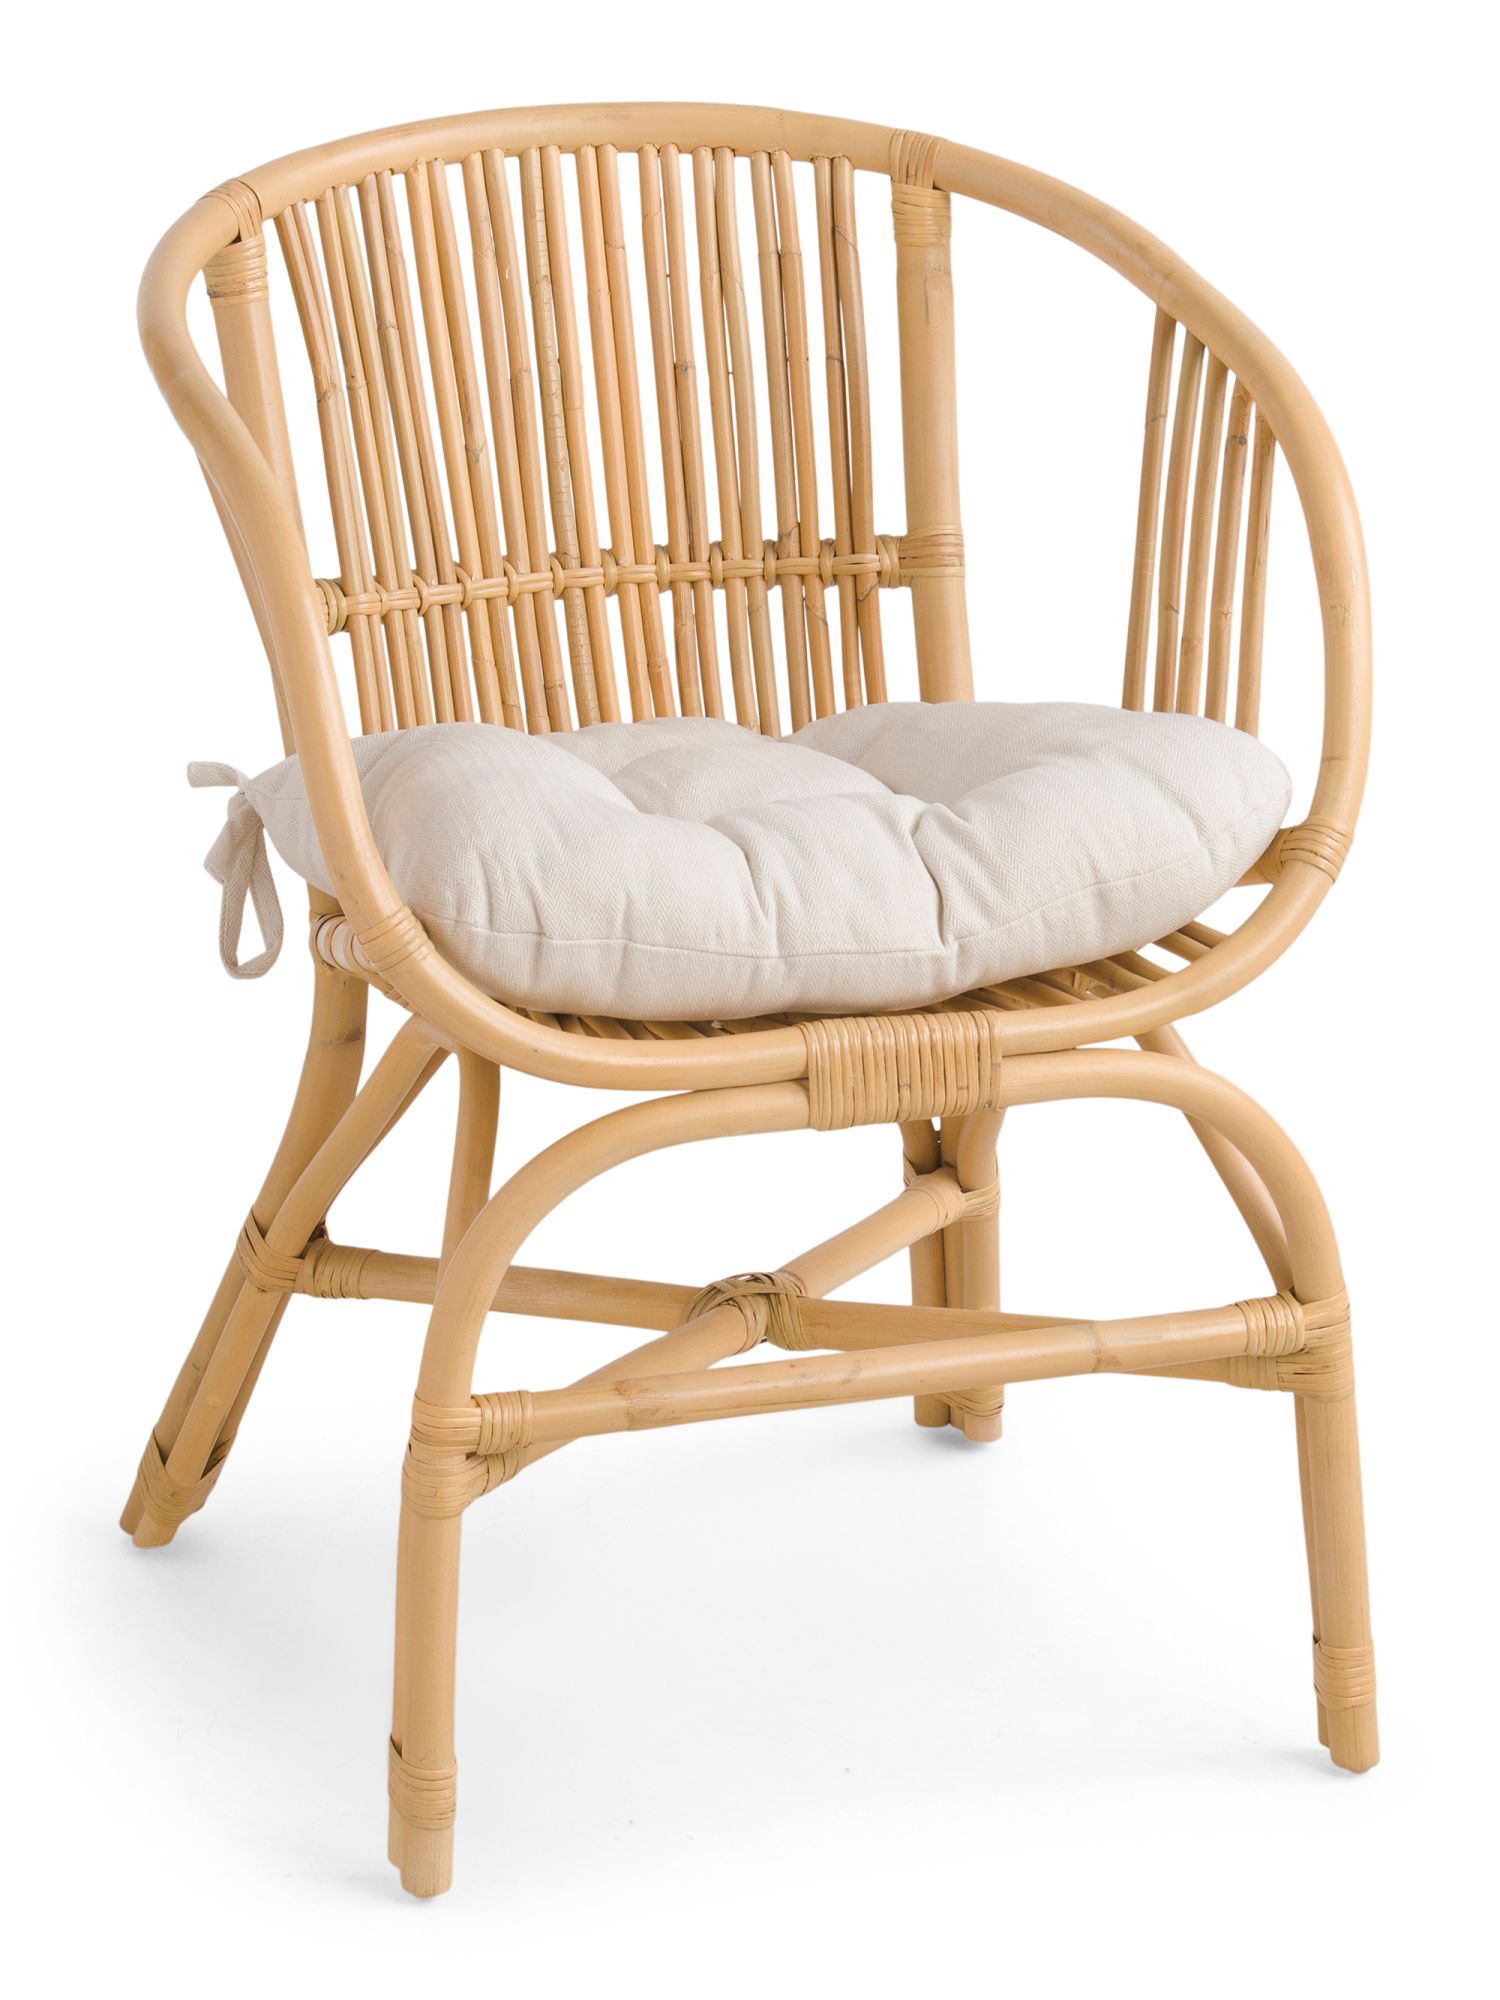 Dorina Rattan Dining Chair With Cushion | Marshalls